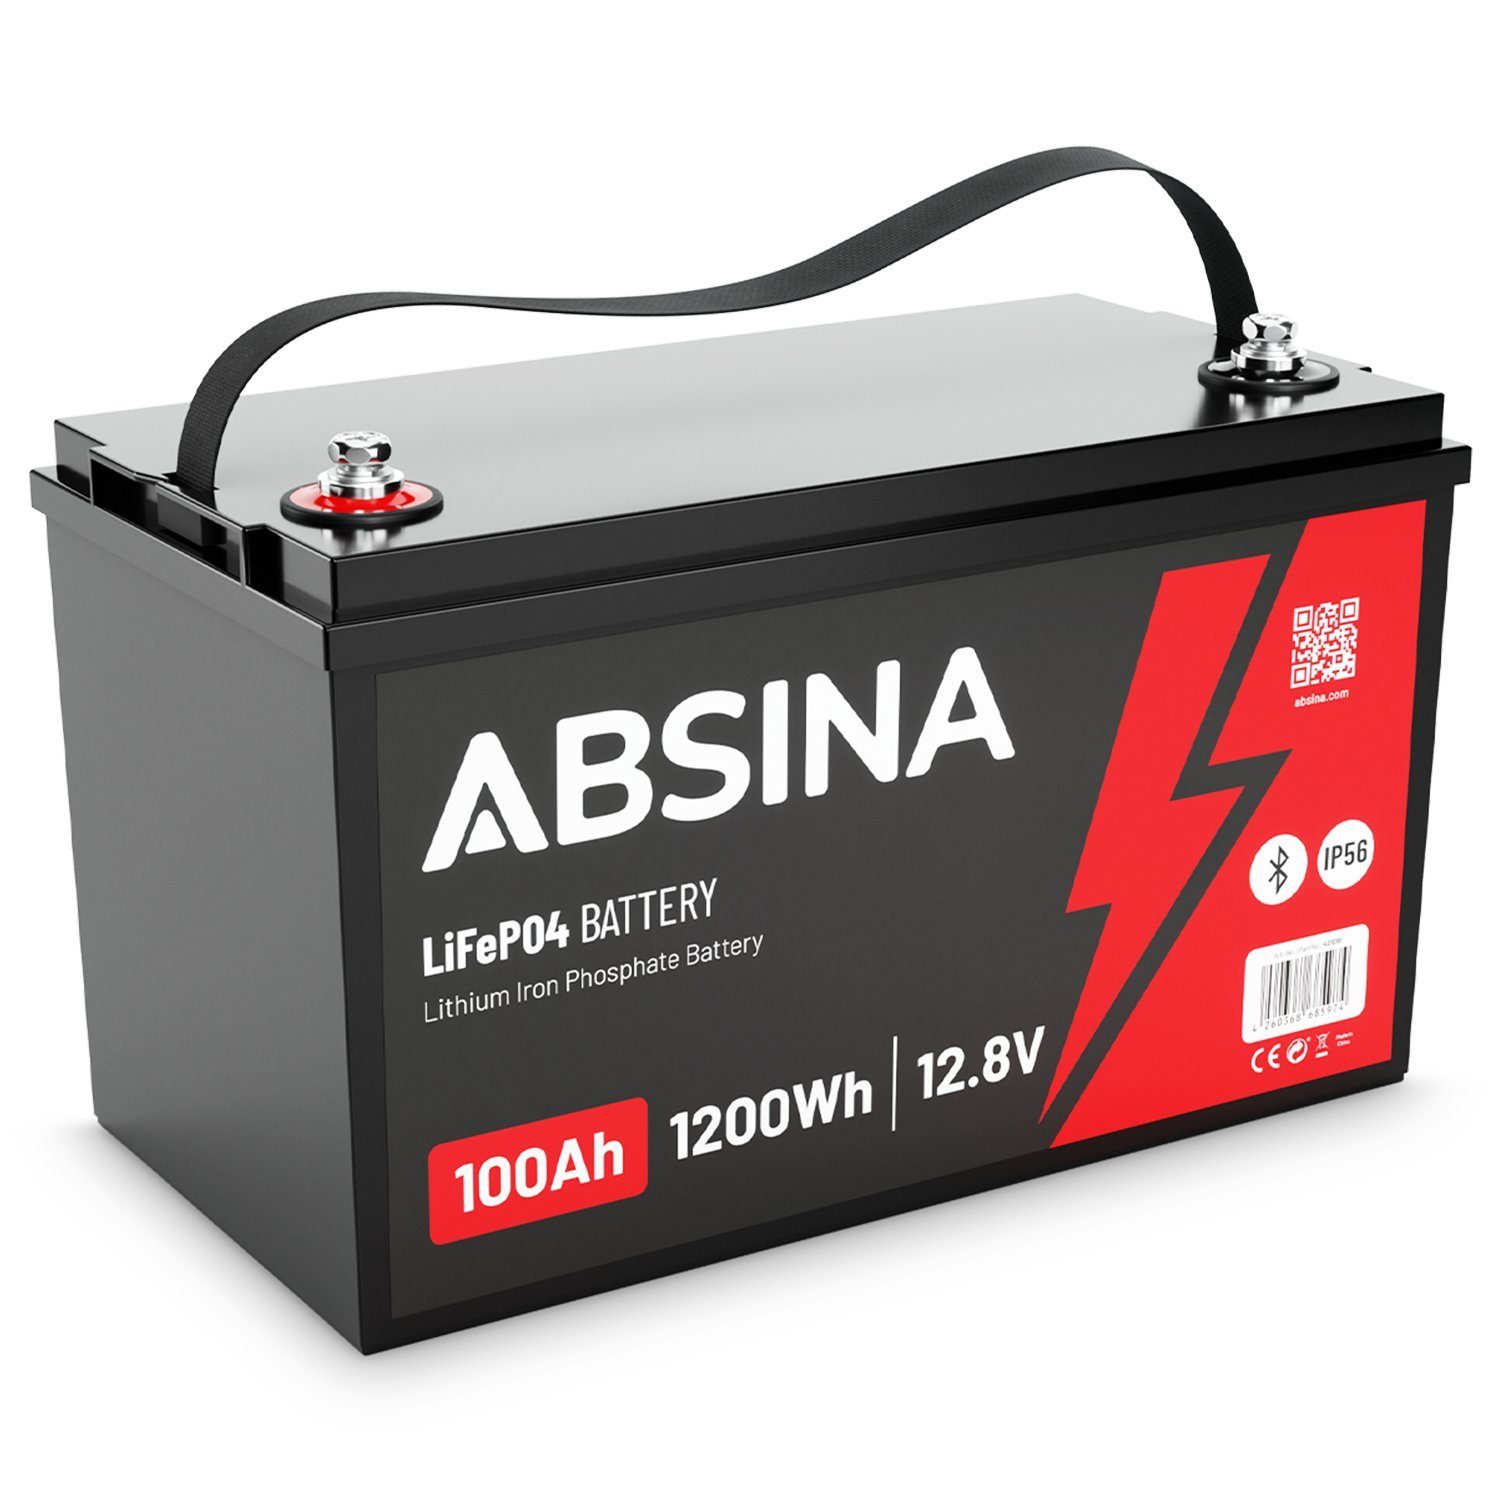 ABSINA BMS Solarakkus V) (12.8 Versorgungsbatterie 12V LiFePO4 Akku Bluetooth 100Ah wartungsfrei